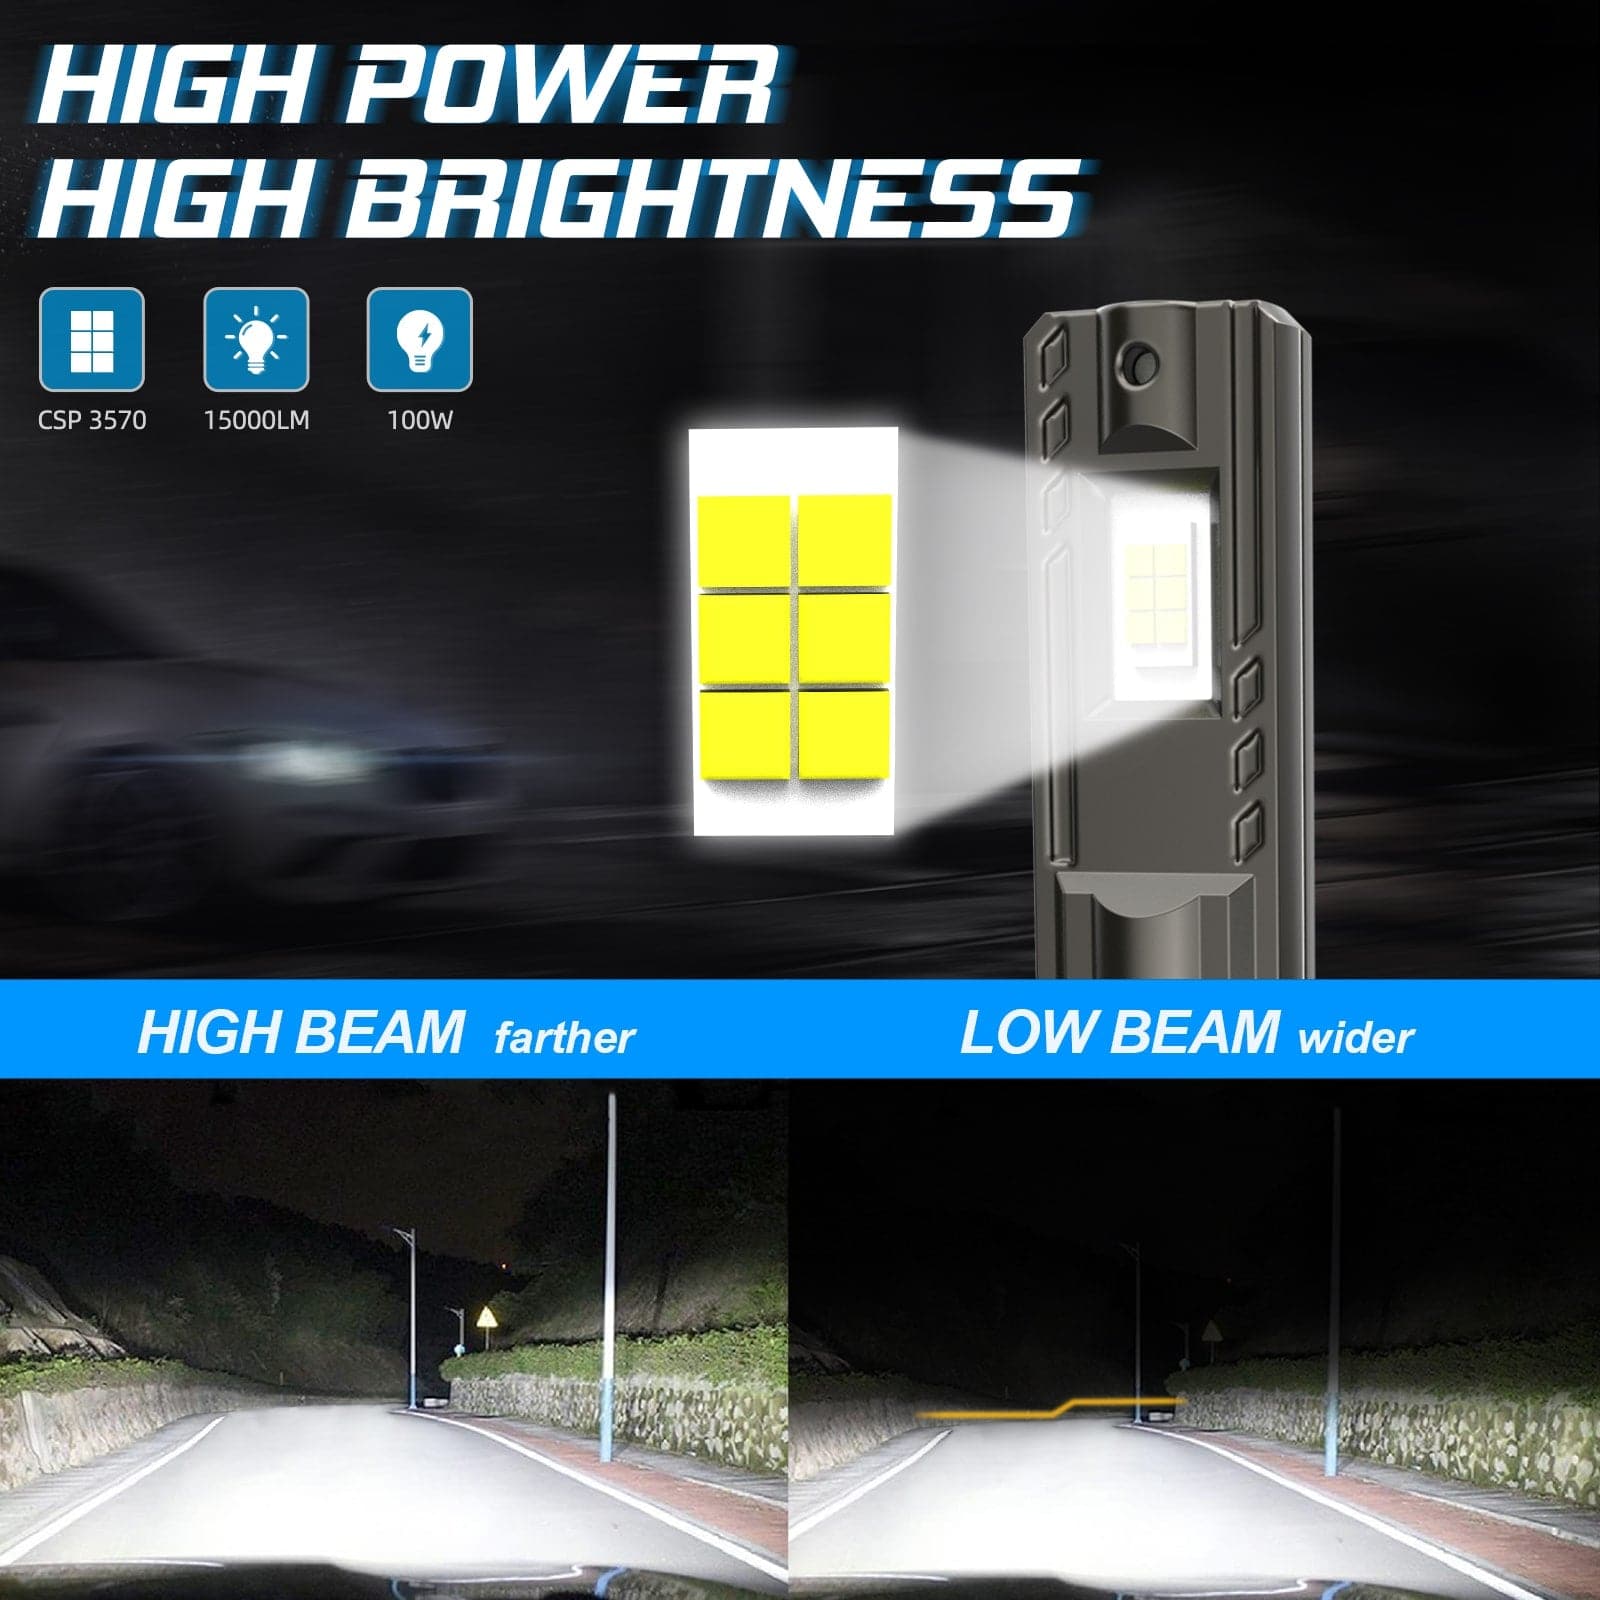 BEVINSEE S550 9006 HB4 LED Headlight Bulbs 100W Low Beam Lights